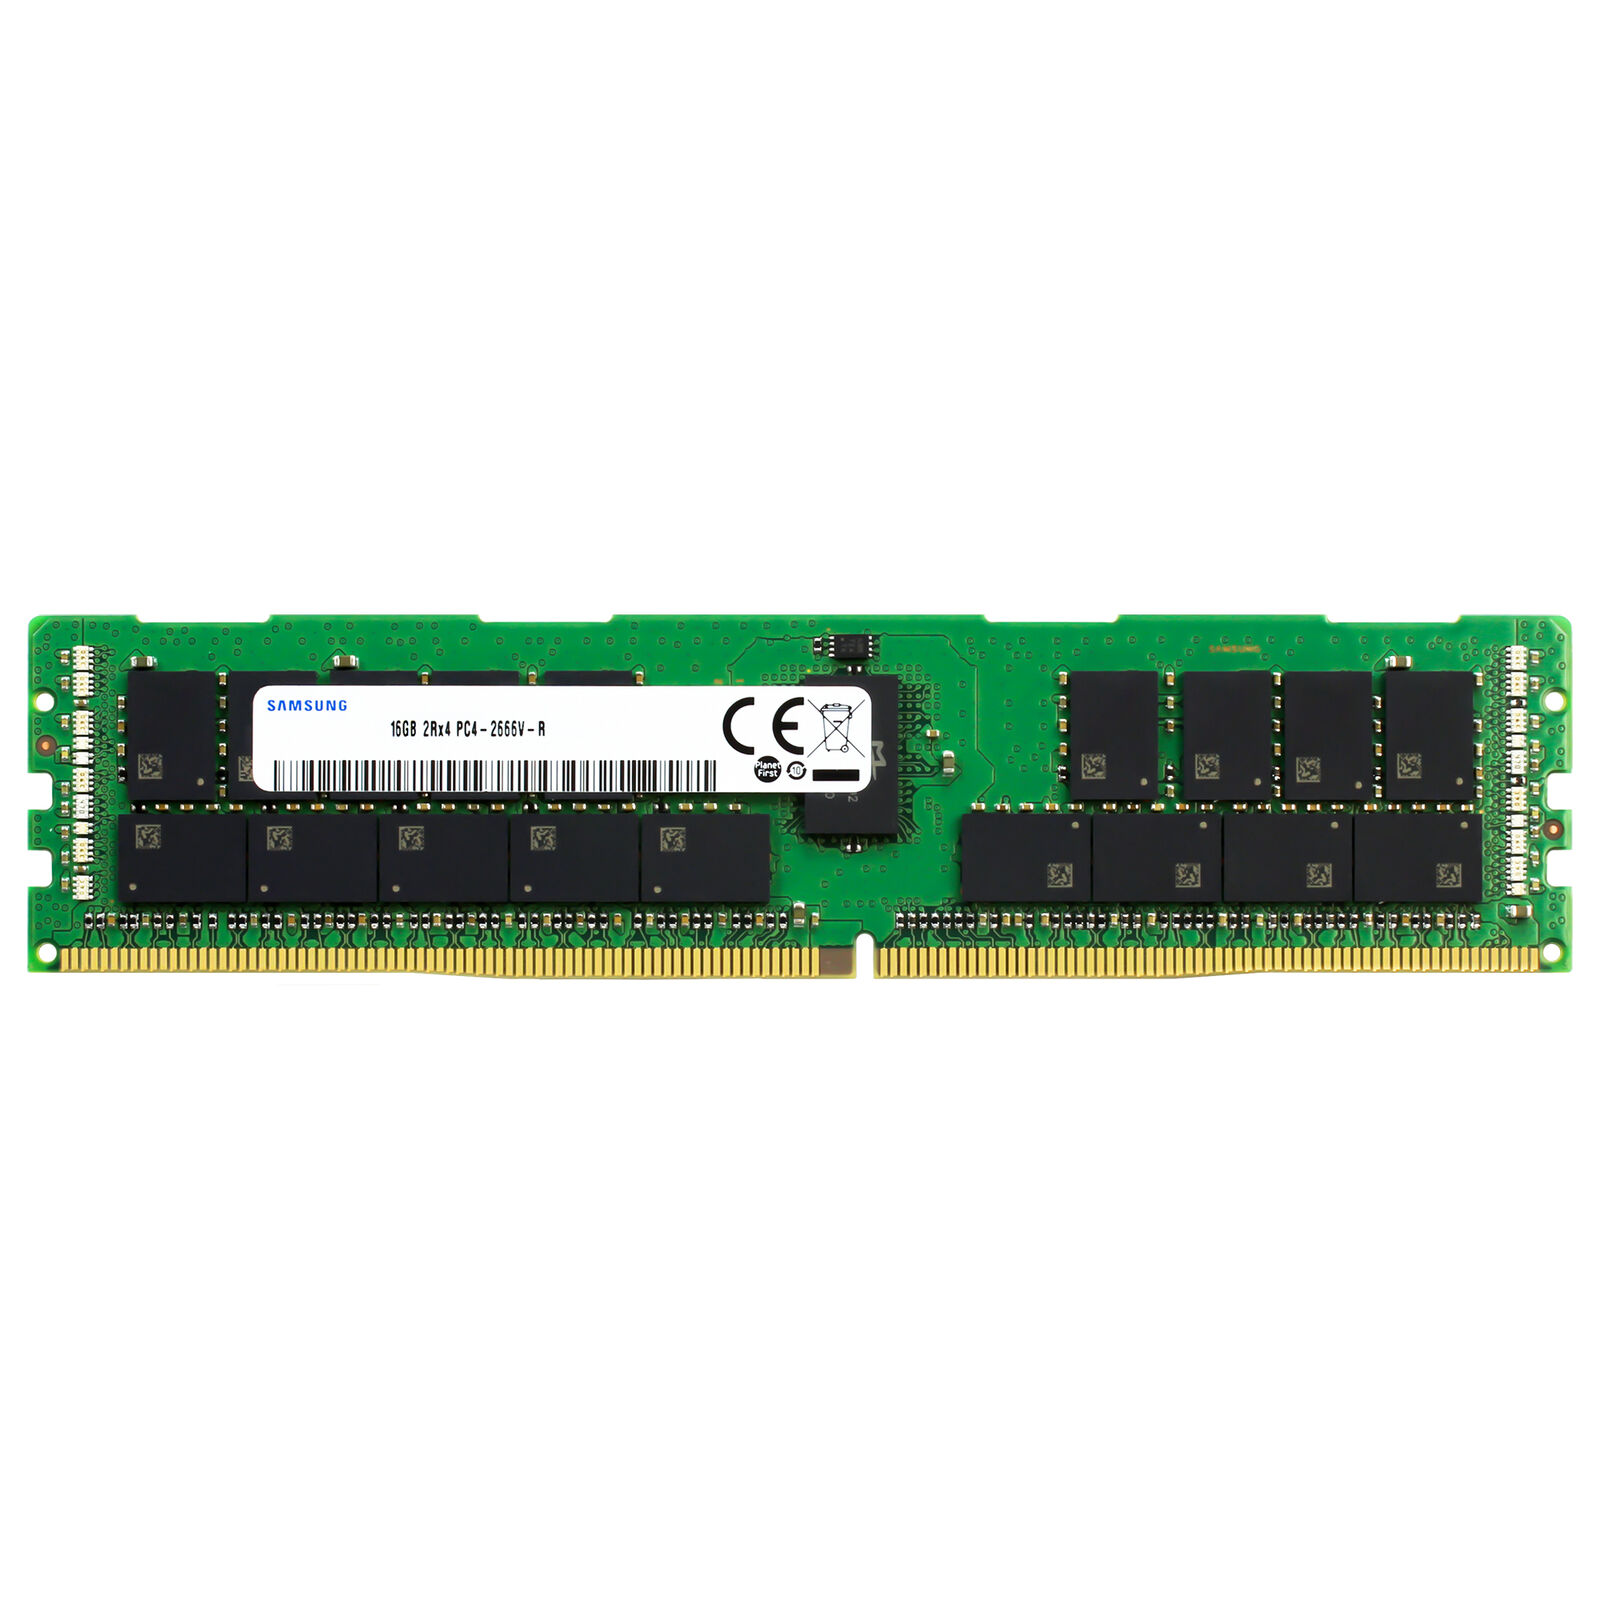 Samsung 16GB 2Rx4 PC4-2666 RDIMM DDR4-21300 ECC REG Registered Server Memory RAM